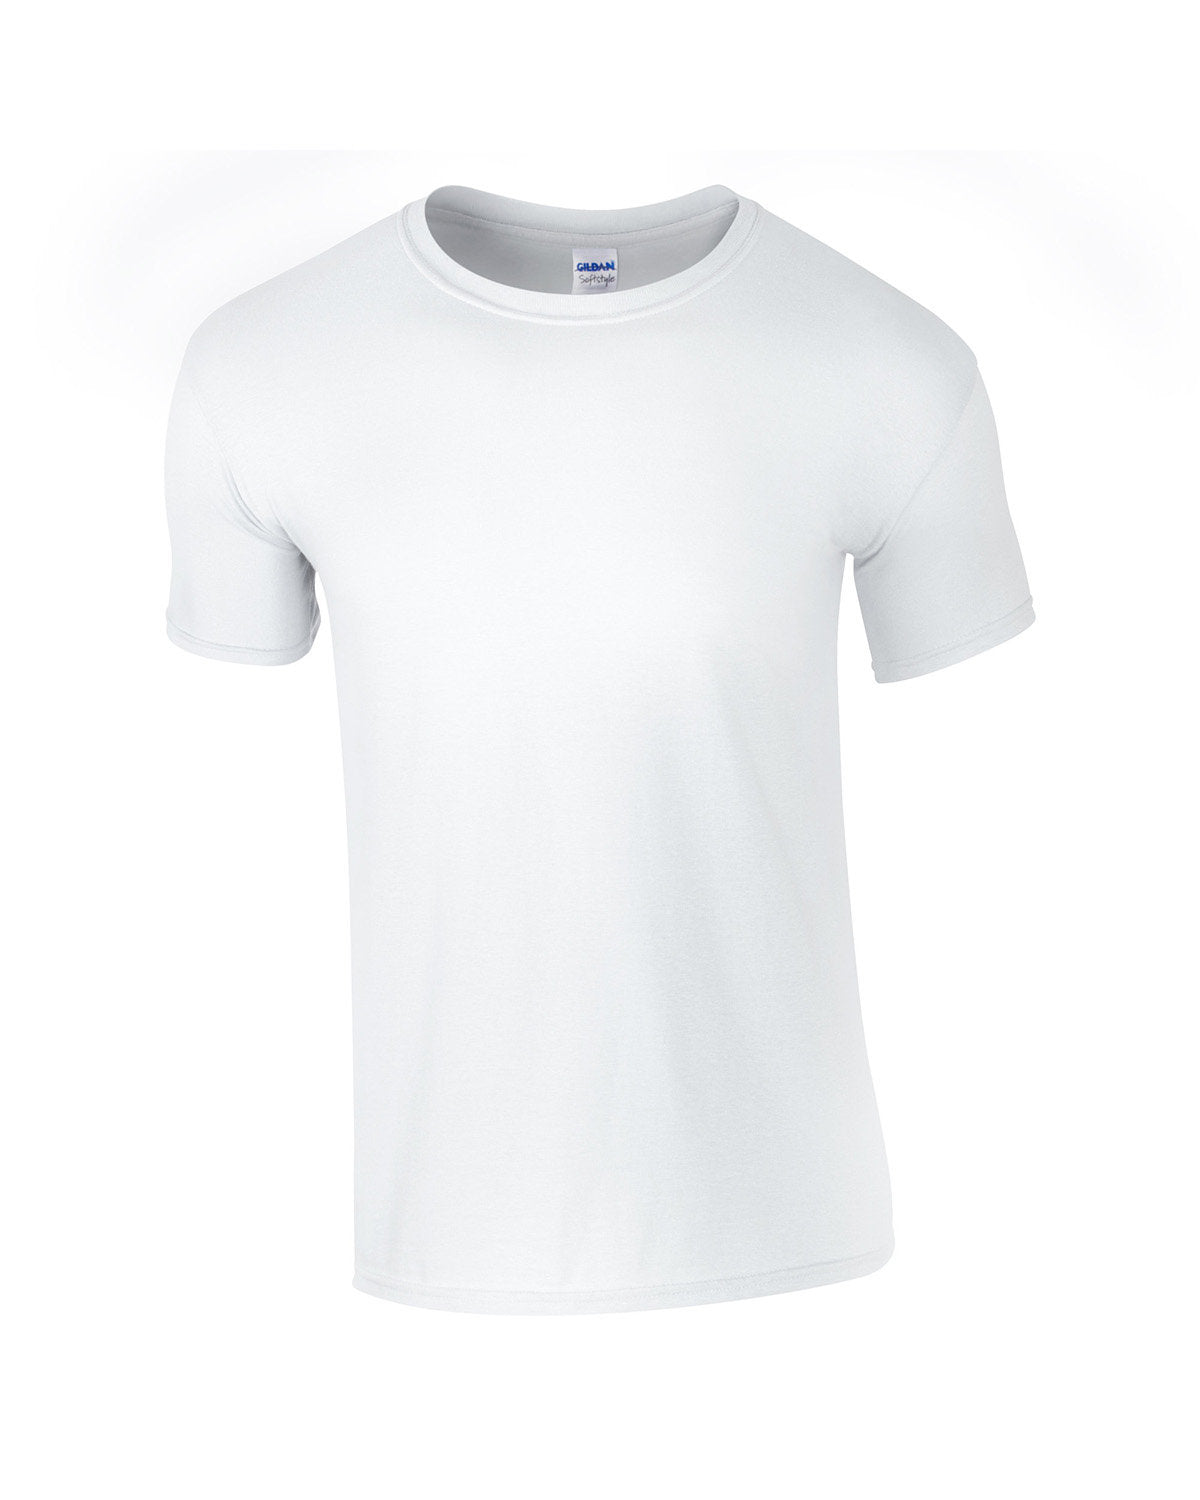 100 Gildan Soft Style T-Shirts